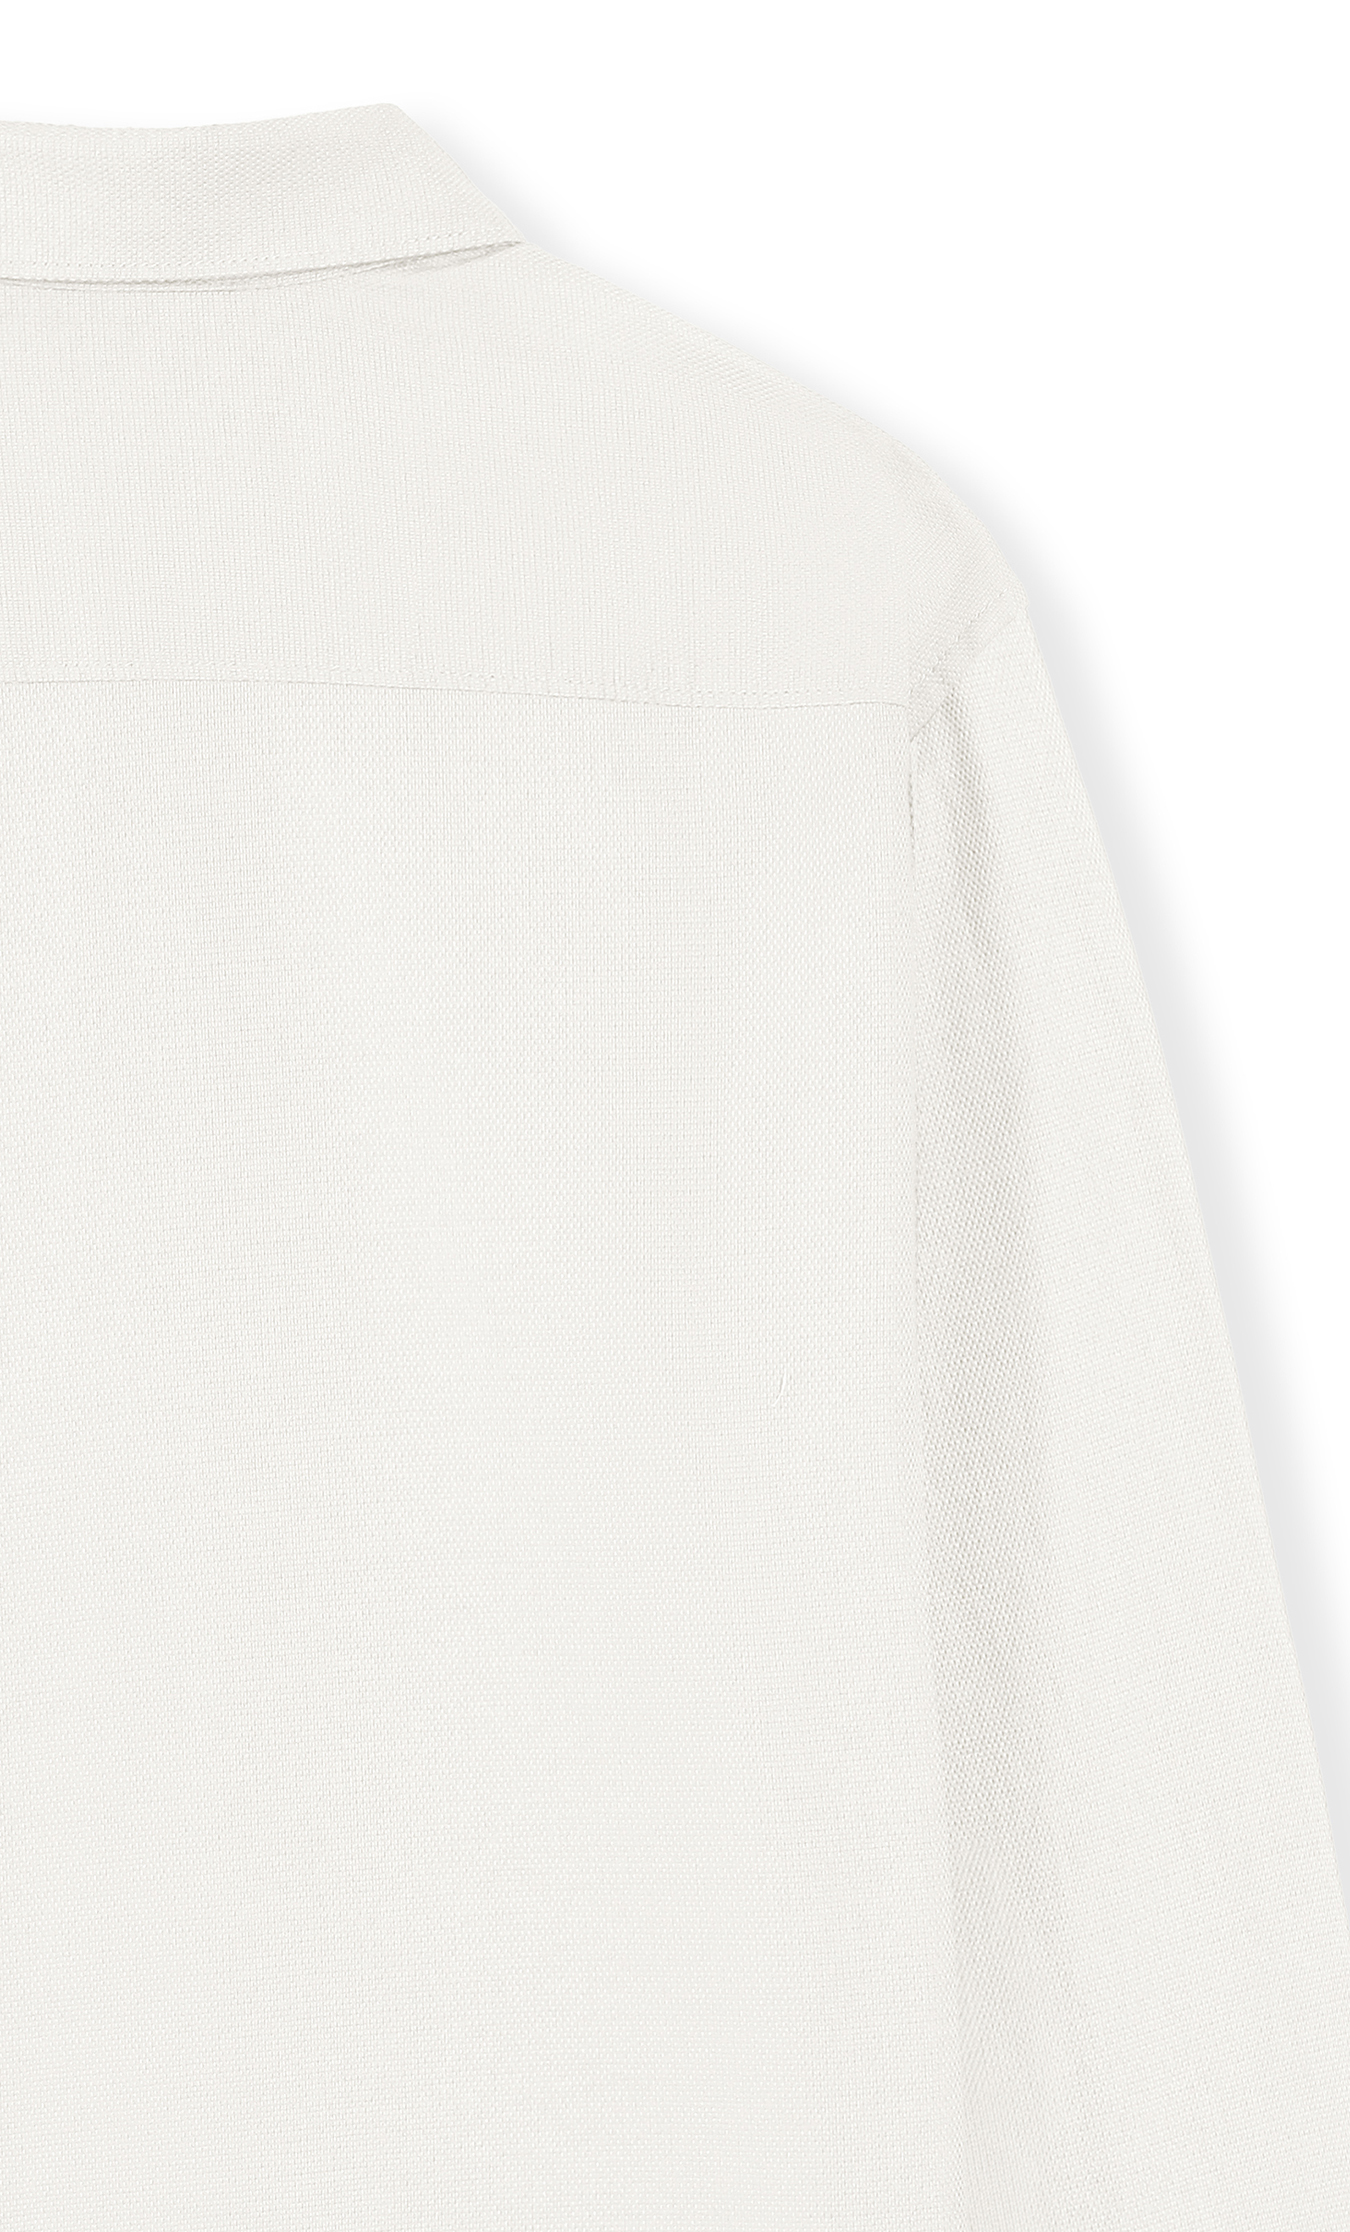 Los Ángeles - Camiseta blanca de manga larga con cuello joya para mujer,  talla XS, Ivory blanco